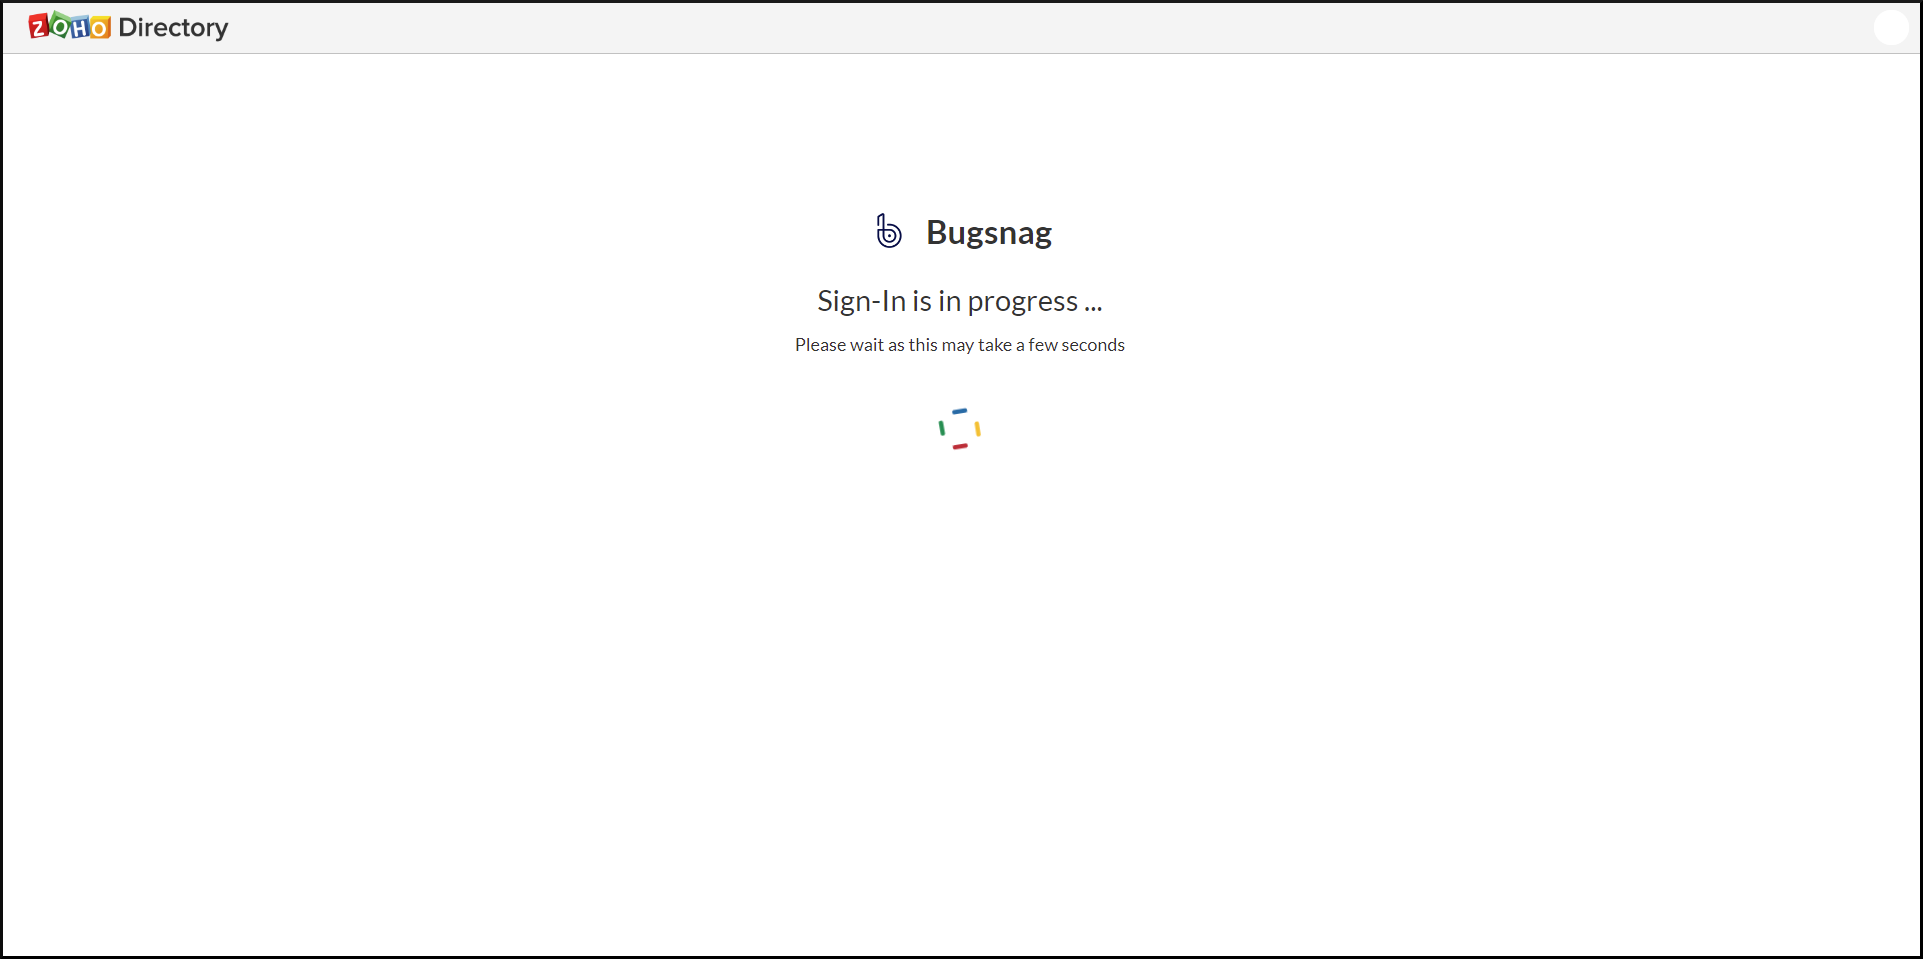 Testing Bugsnag SSO configuration